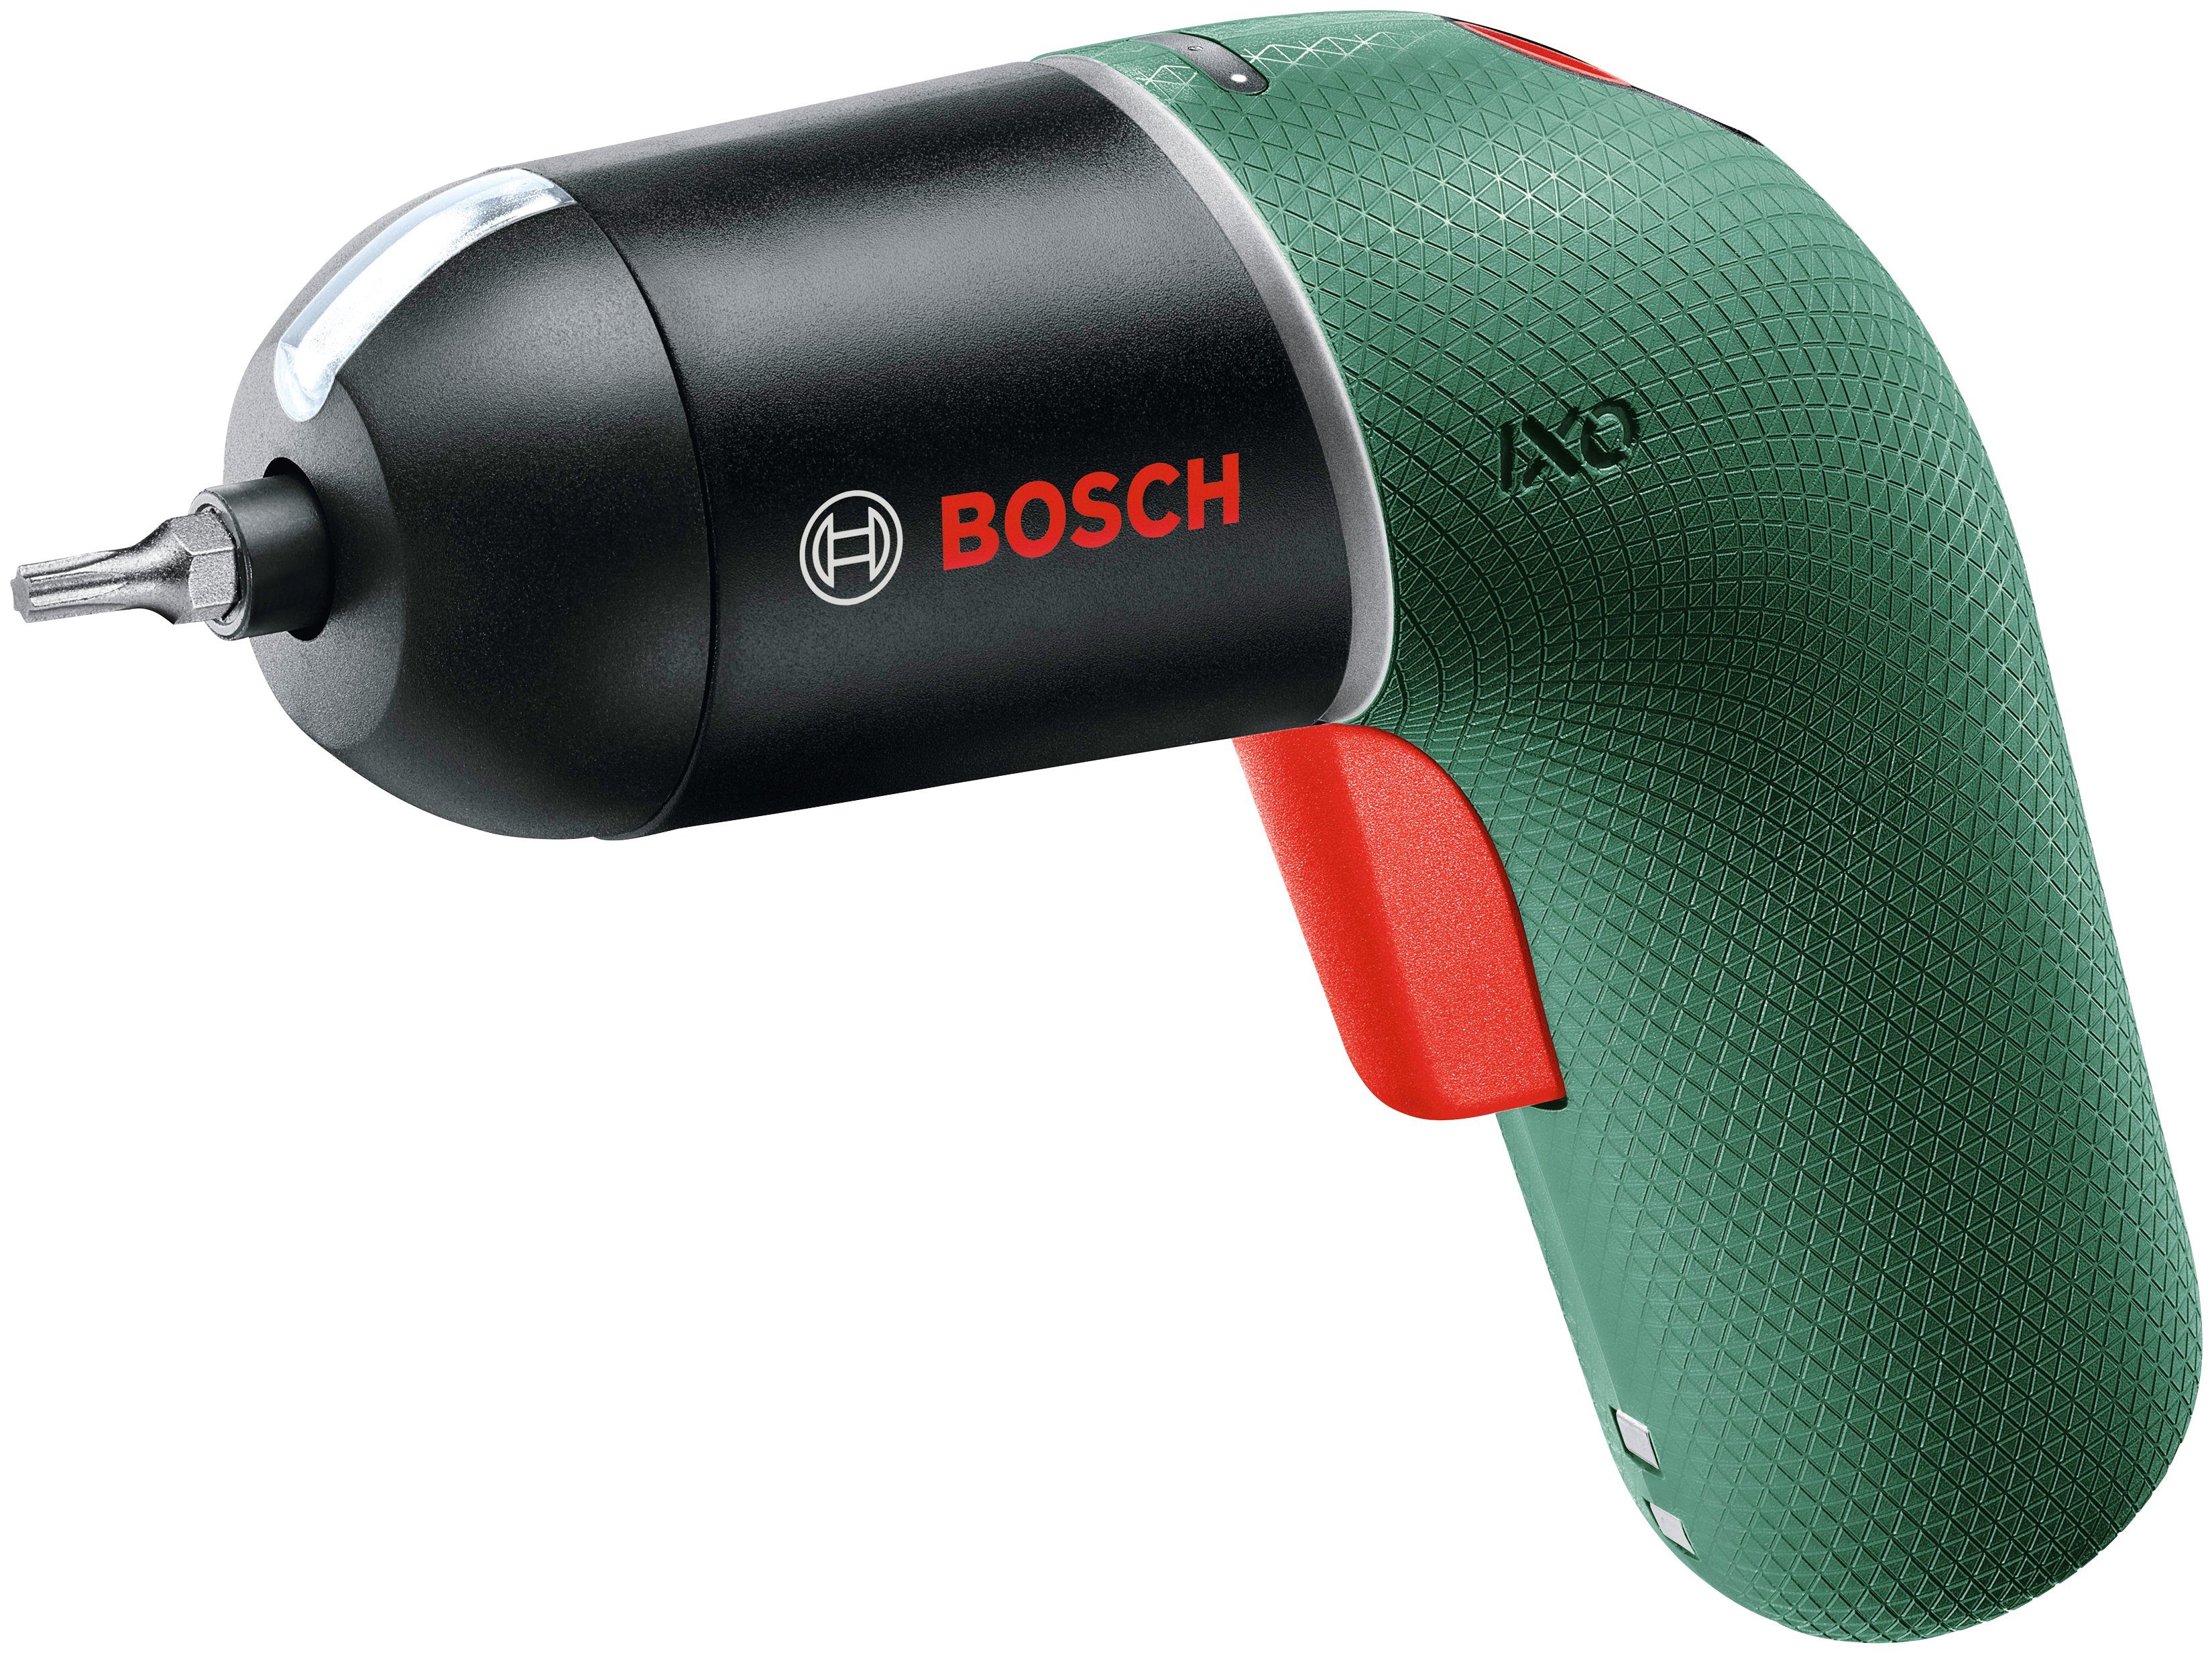 Bosch Home & Garden Akku Classic, inklusive 215 4,5 Nm, und USB-Ladekabel Akku-Schrauber IXO 6 U/min